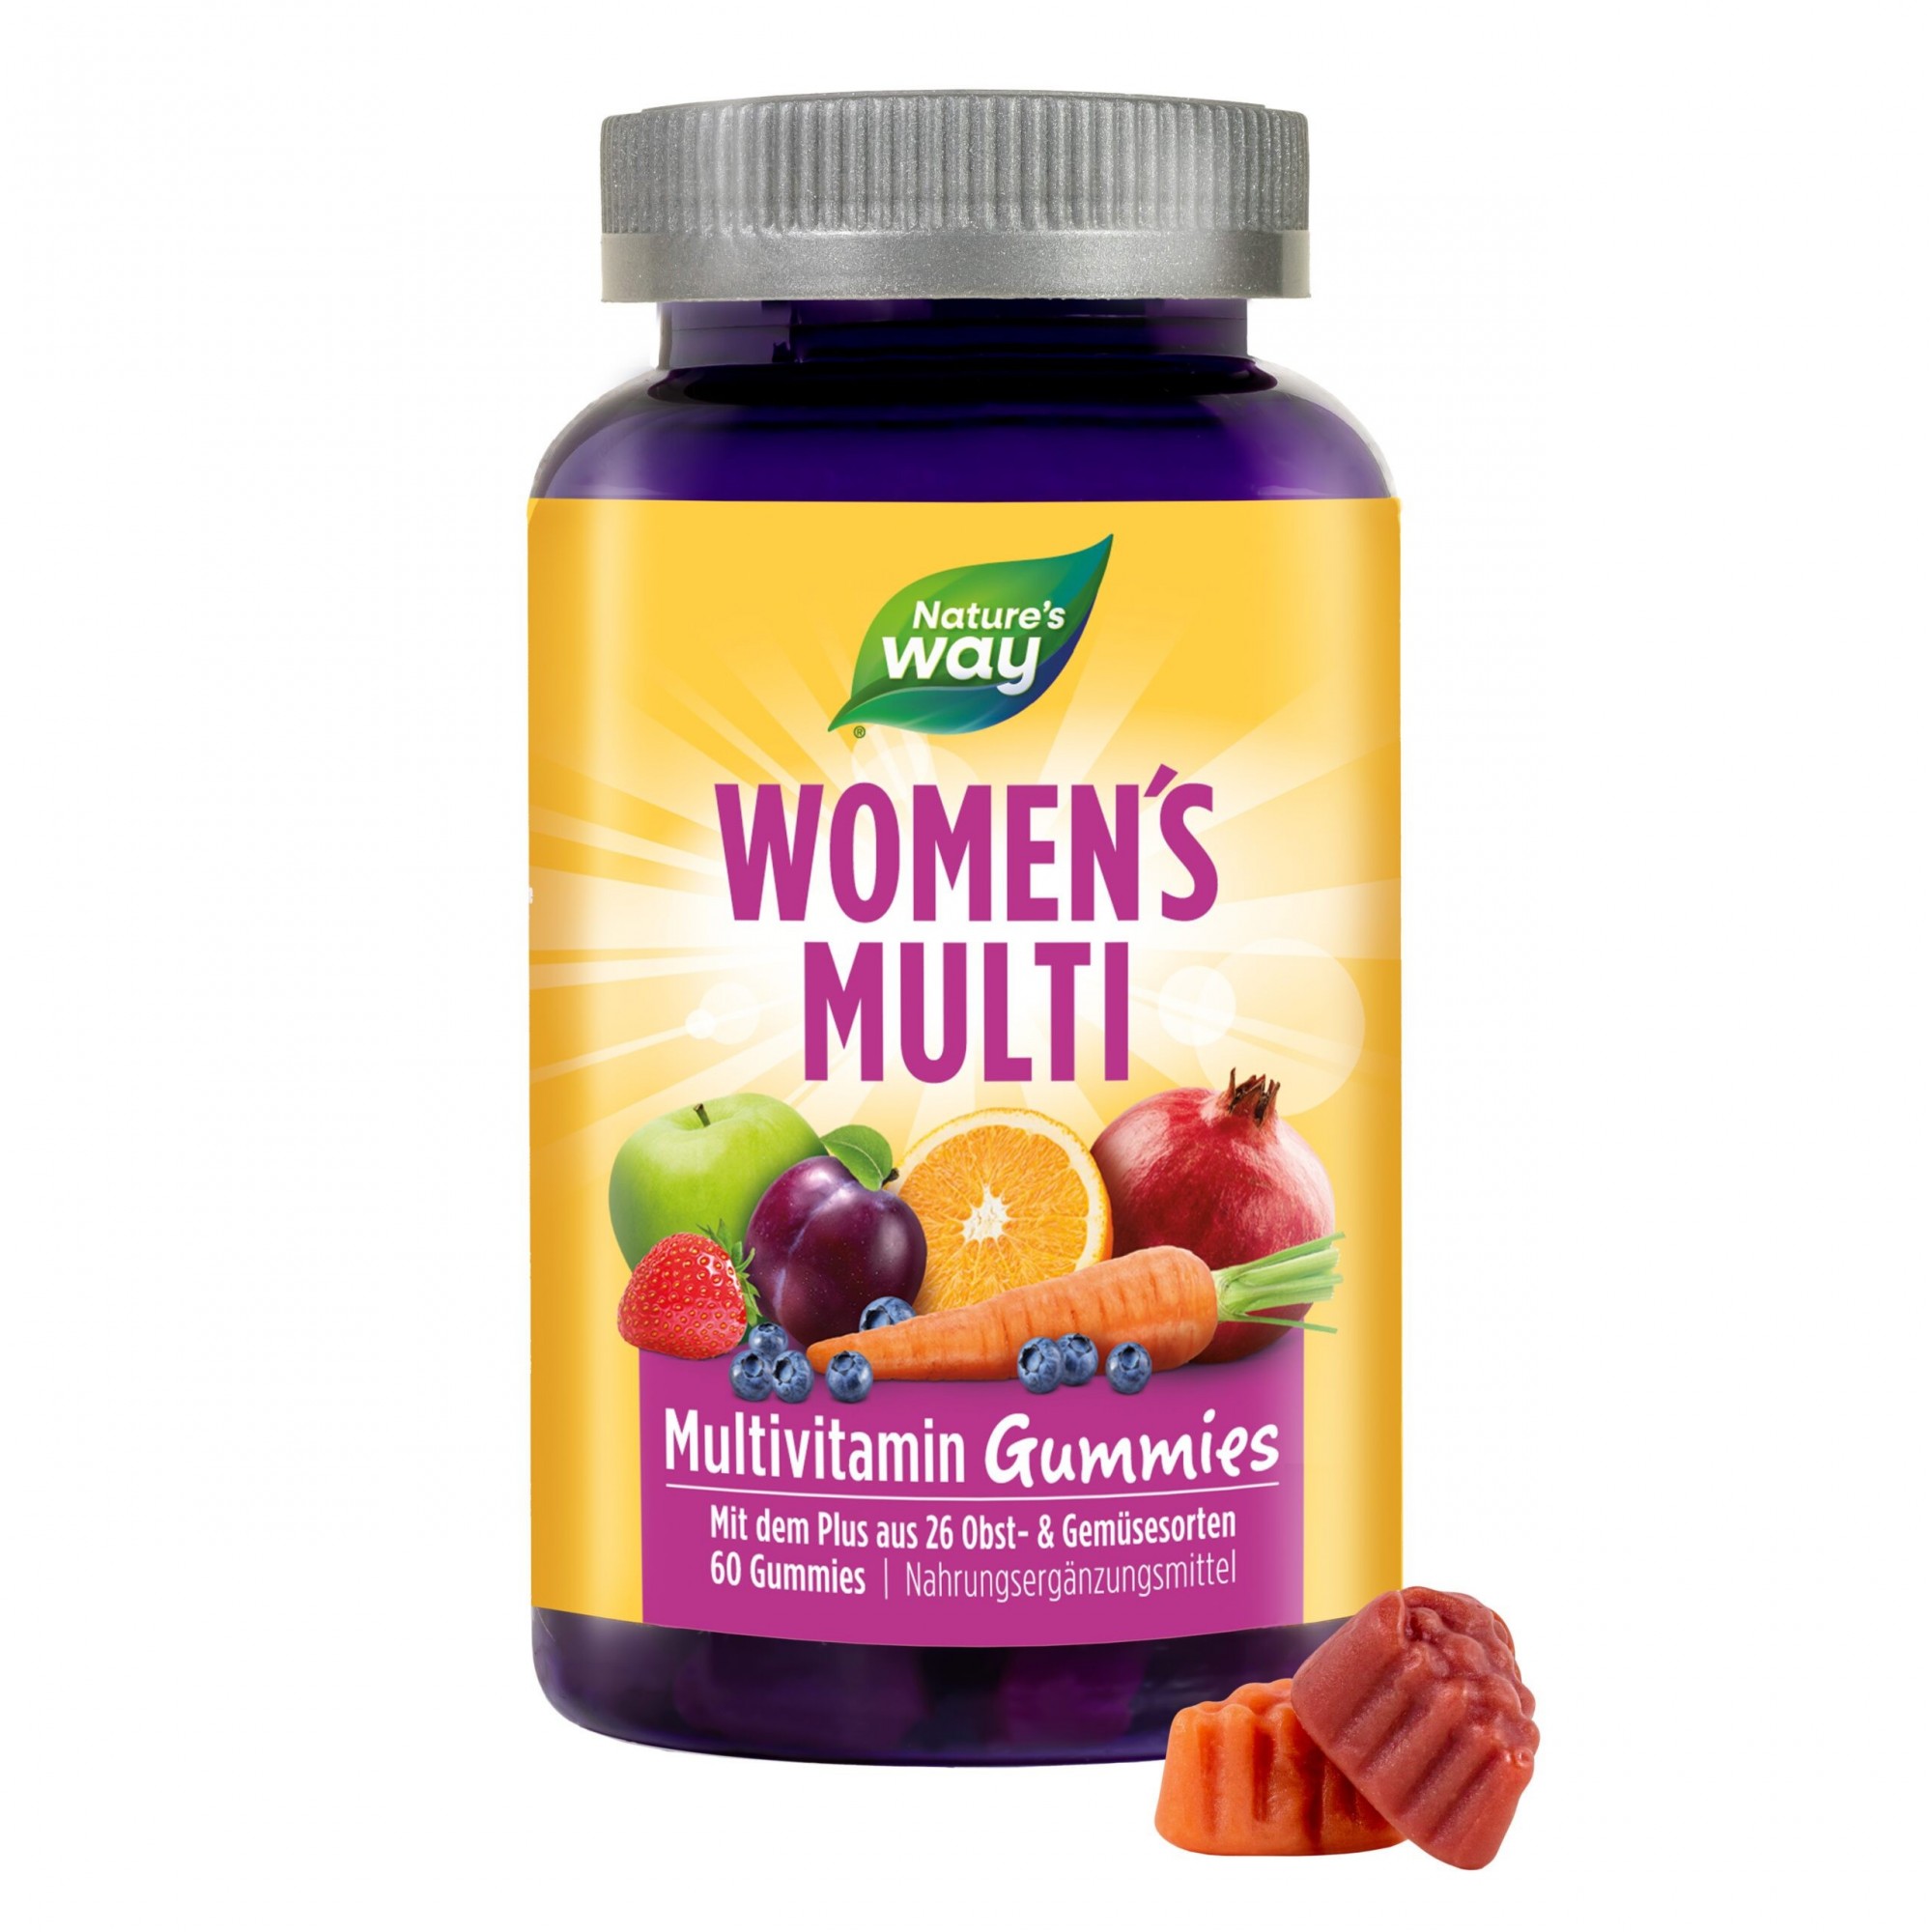 Women's Multi Multivitamin Gummies